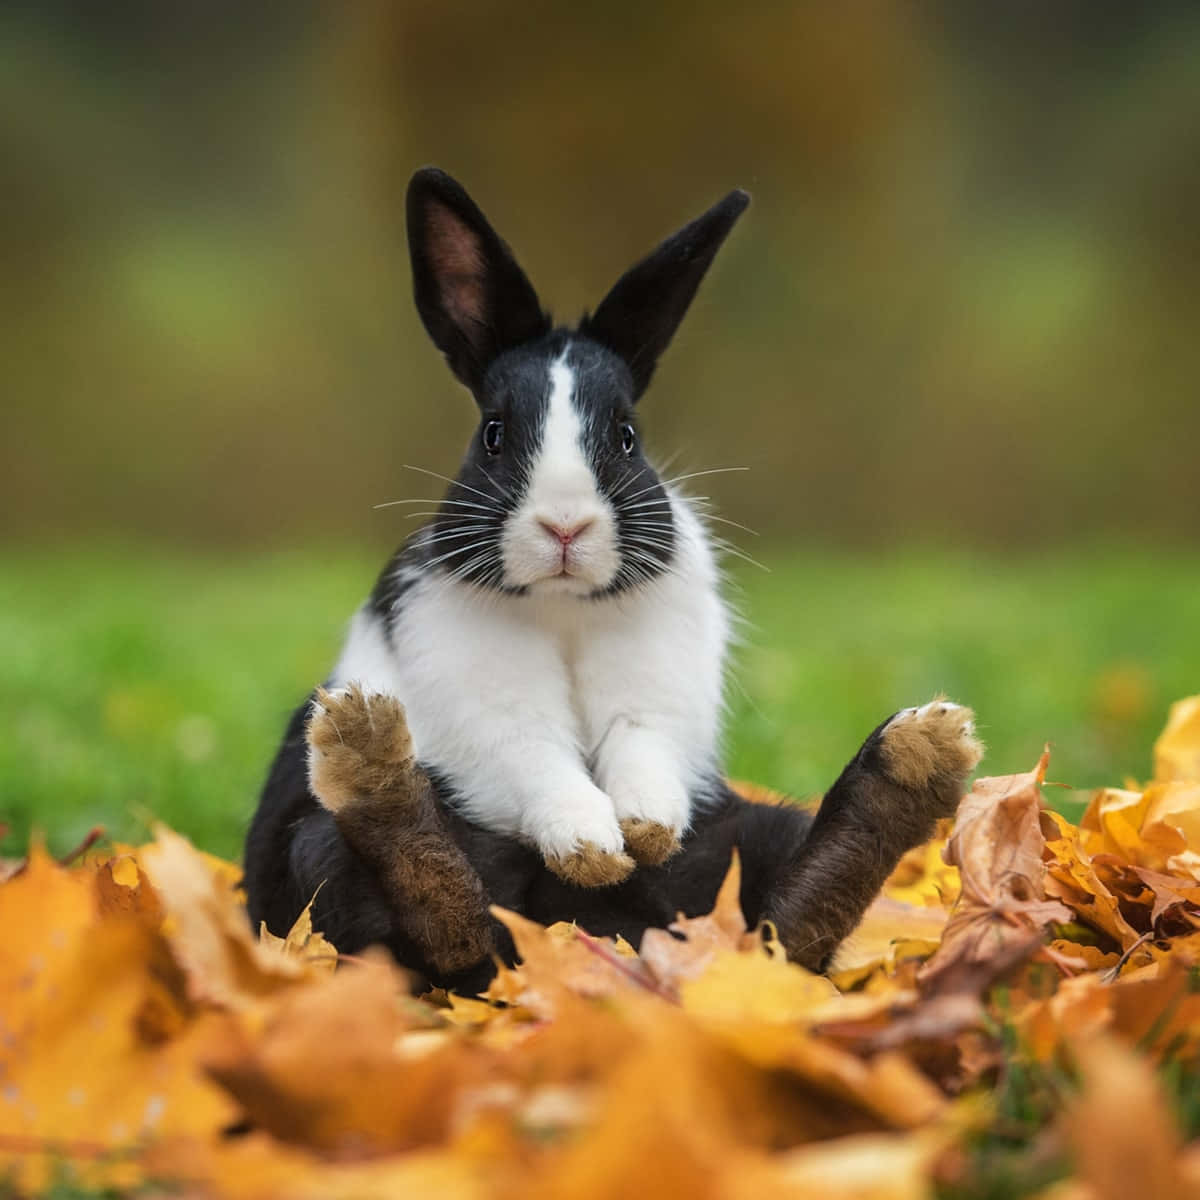 A fluffy white Rabbit